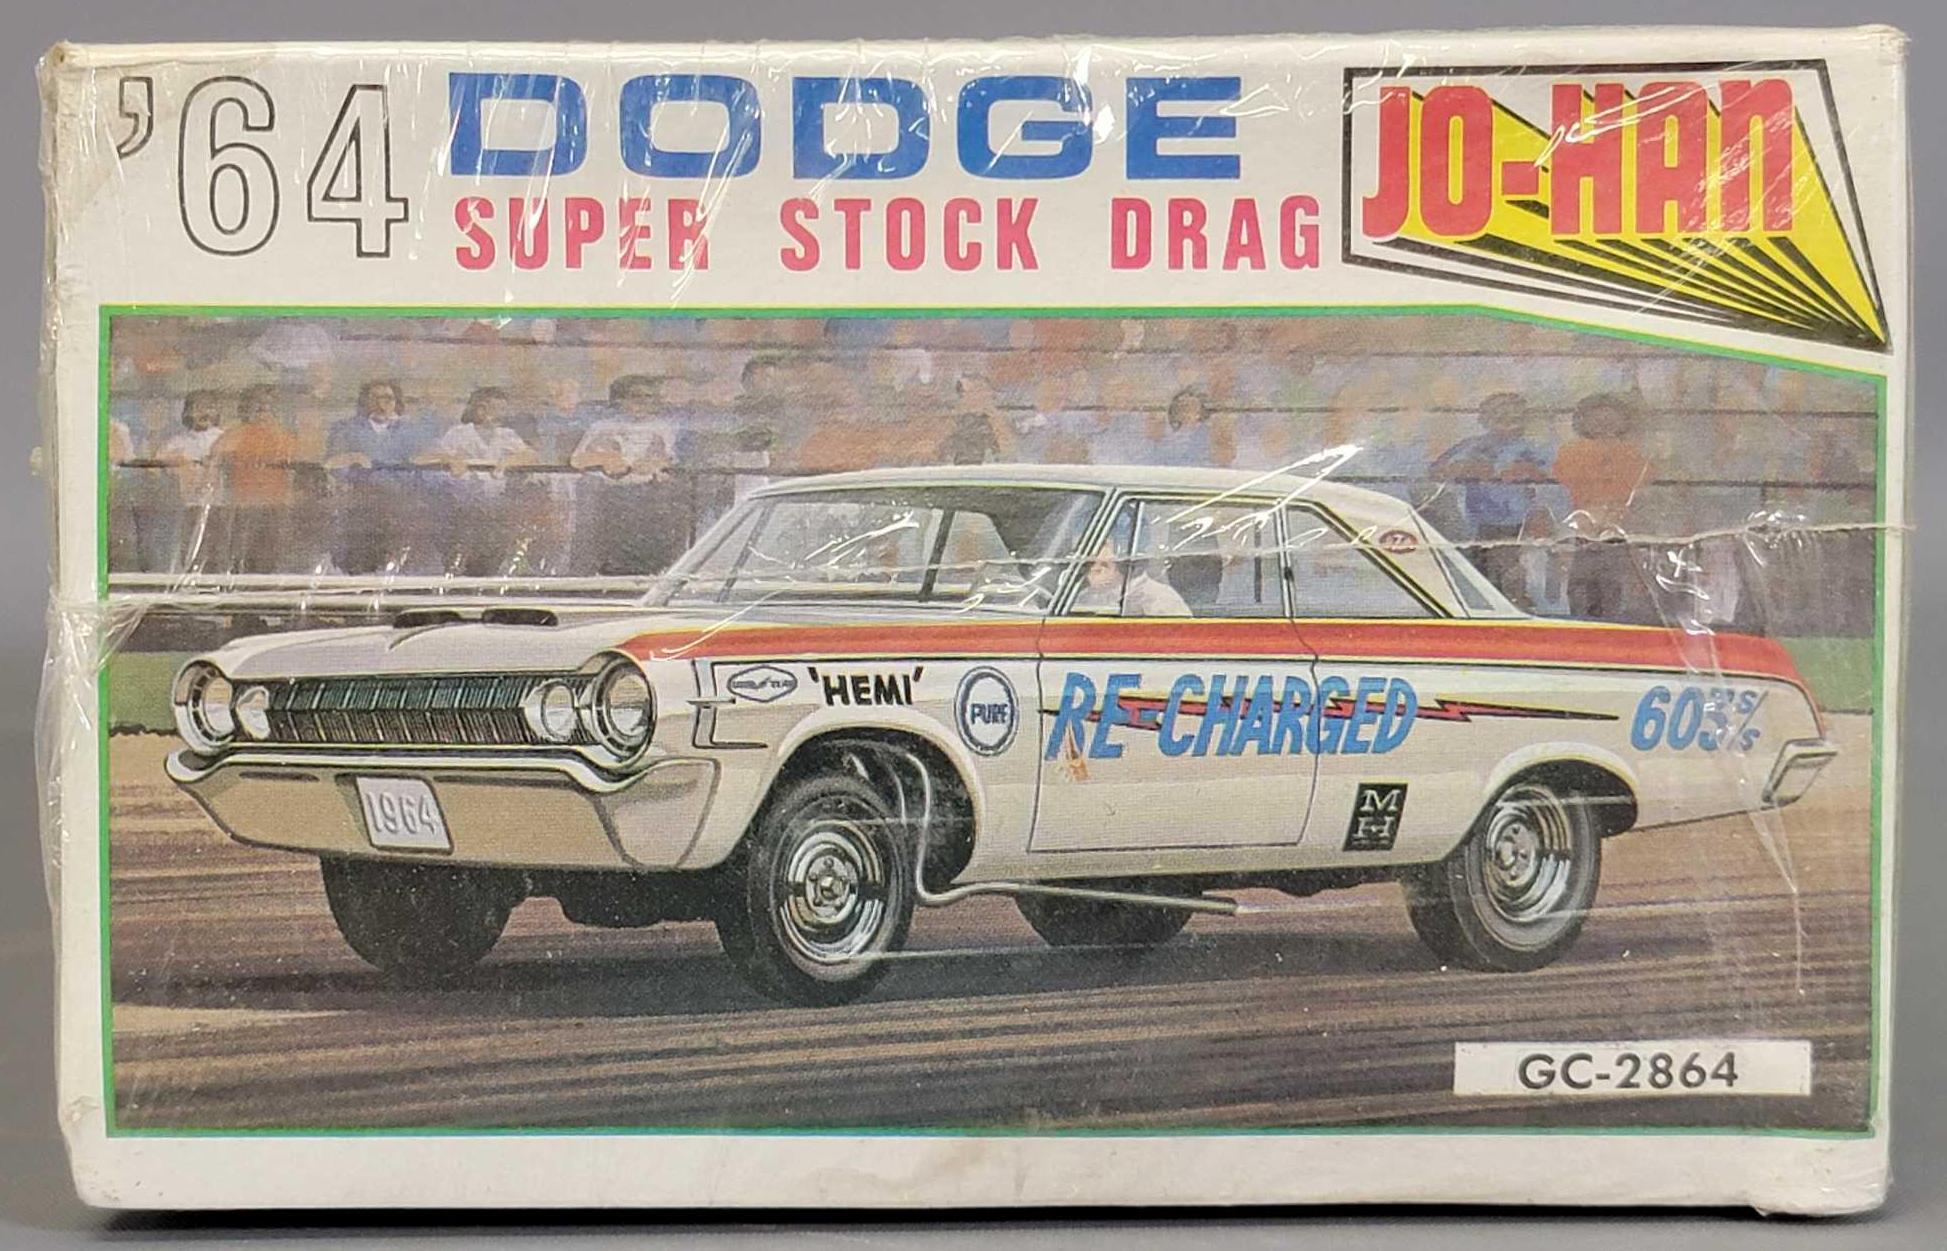 Johan GC-2864 '64 Dodge Super Stock Drag